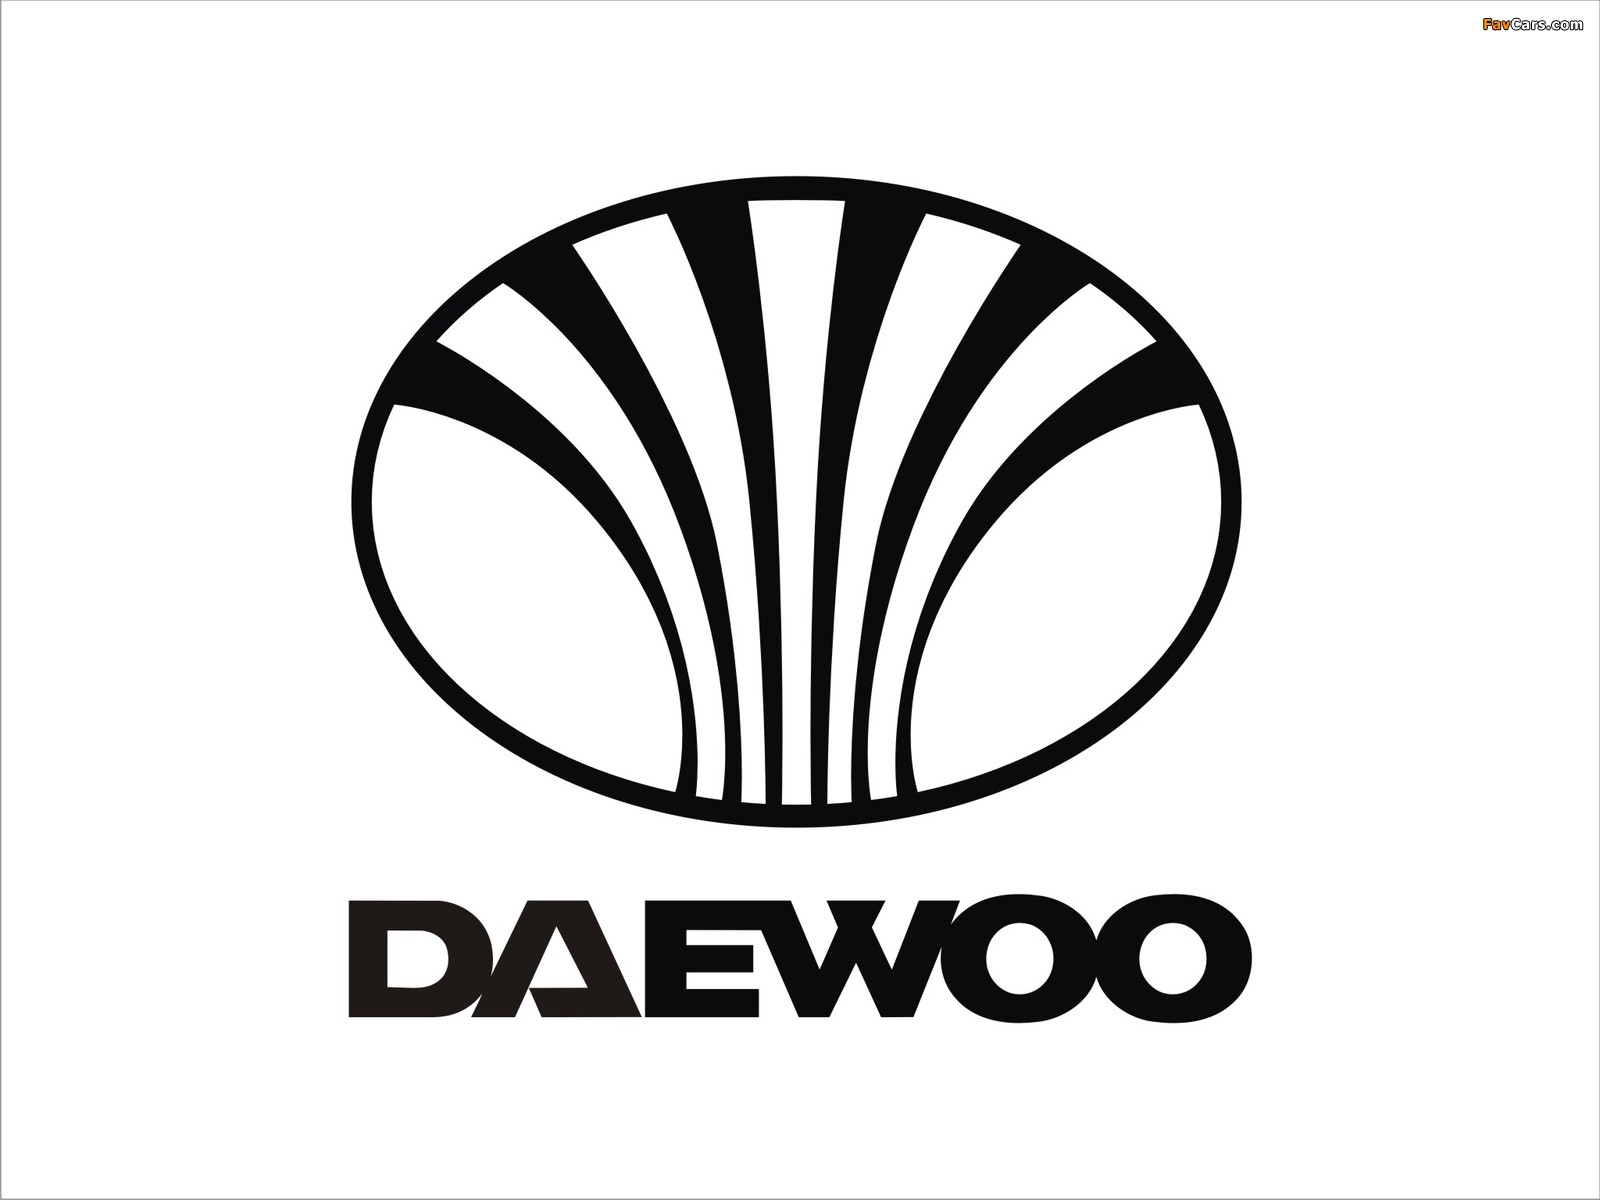 Daewoo images (1600 x 1200)